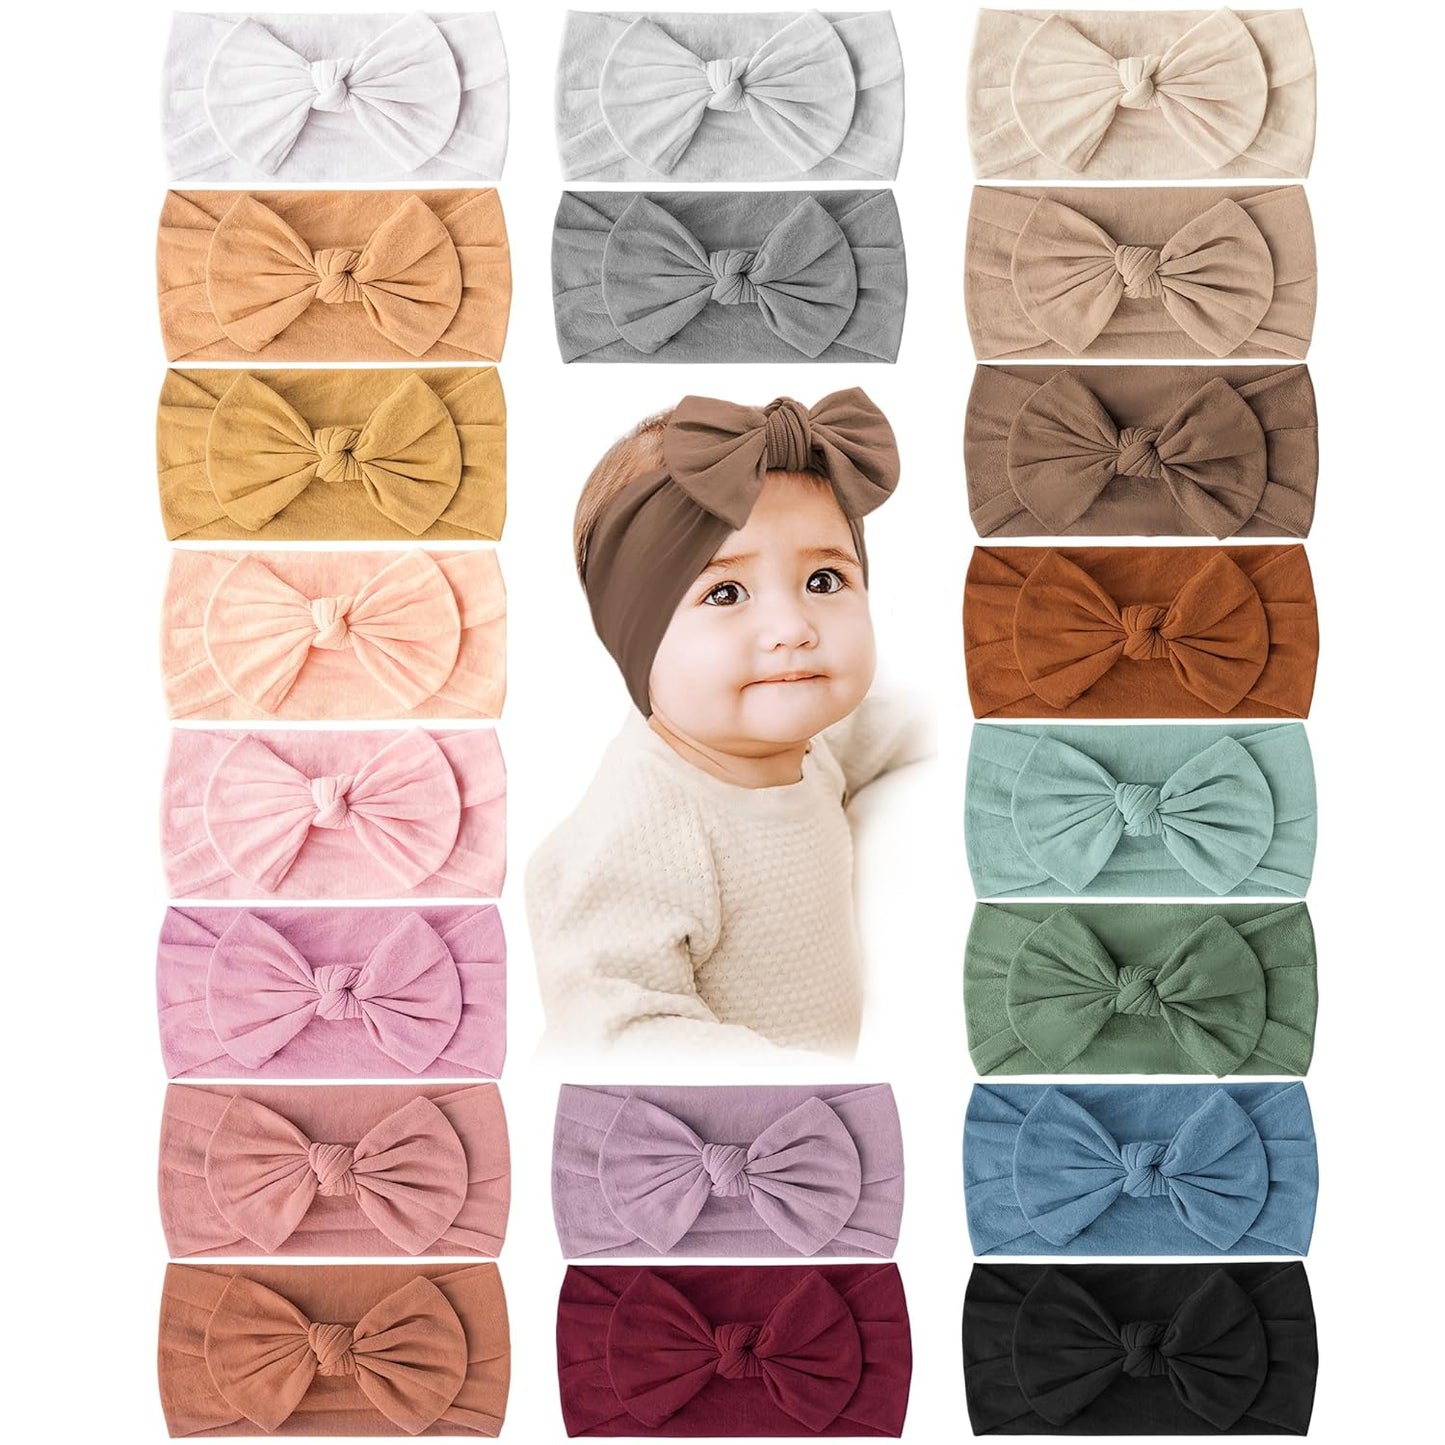 Prohouse 20PCS Baby Nylon Headbands Hairbands Hair Bow Elastics for Baby Girls Newborn Infant Toddlers Kids(Clay)